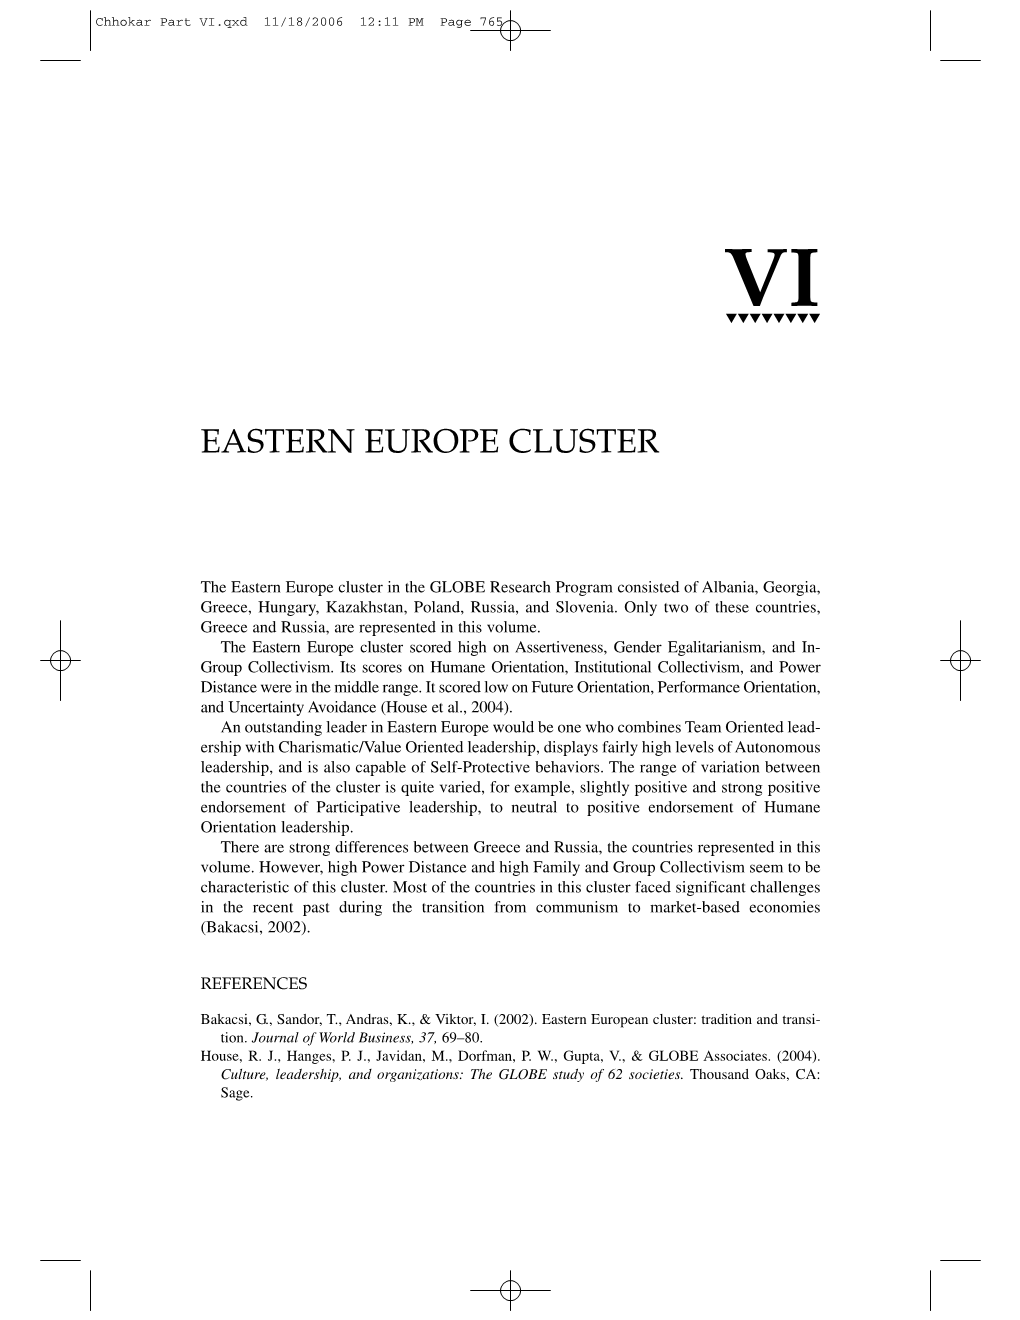 Eastern Europe Cluster